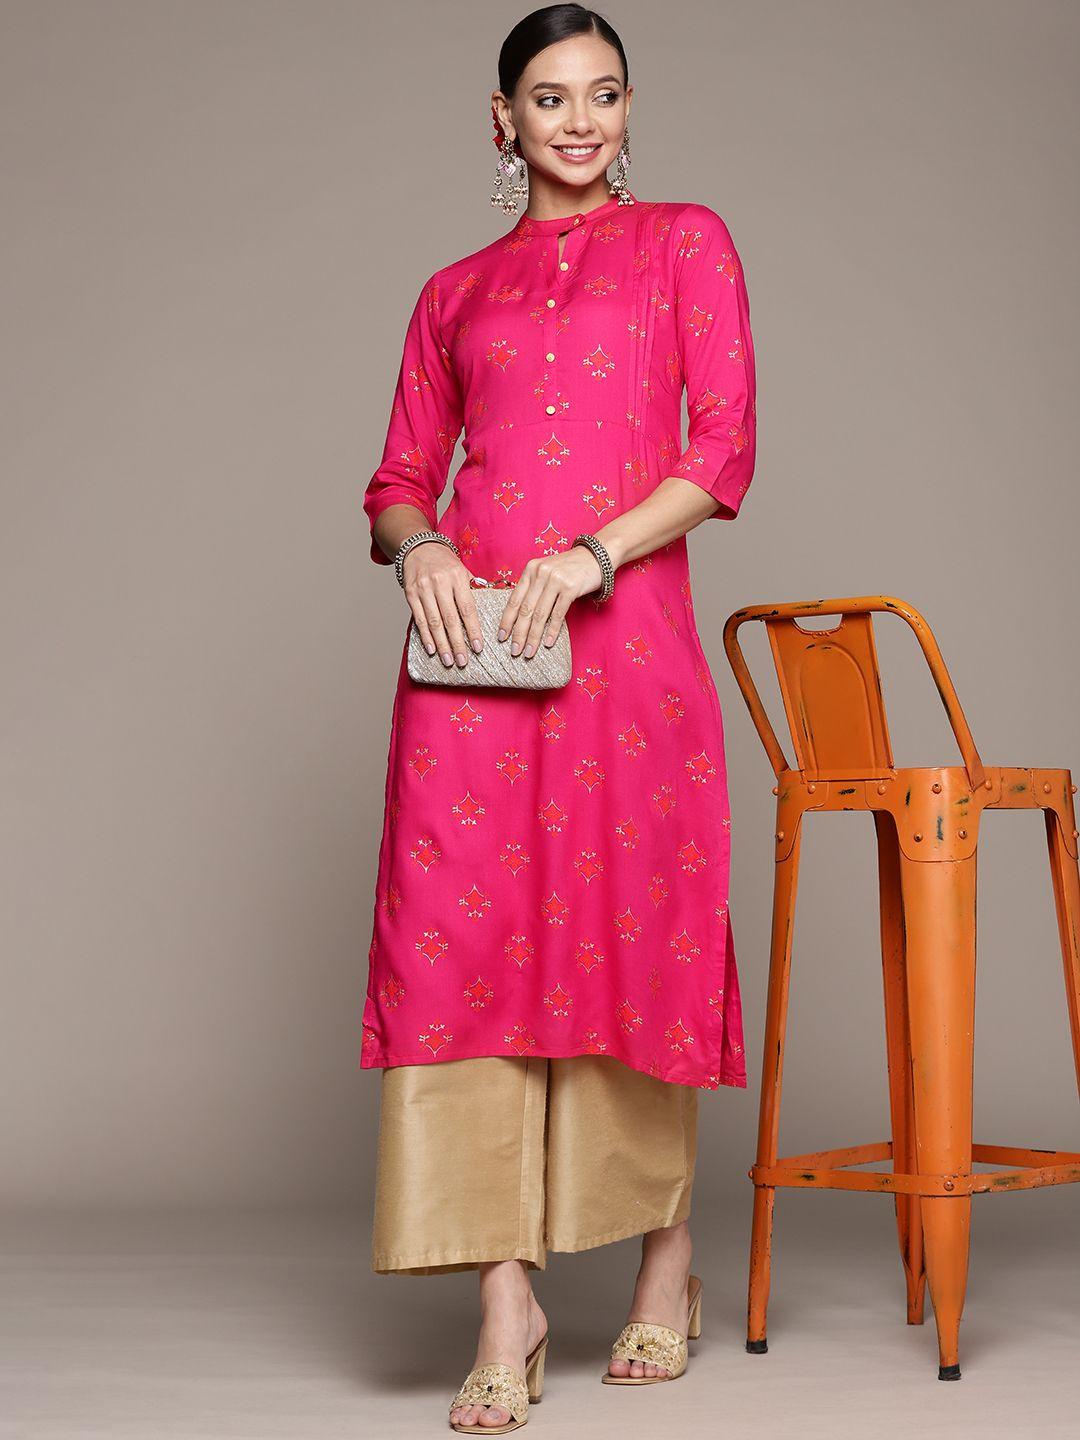 anubhutee women pink ethnic motifs printed kurta